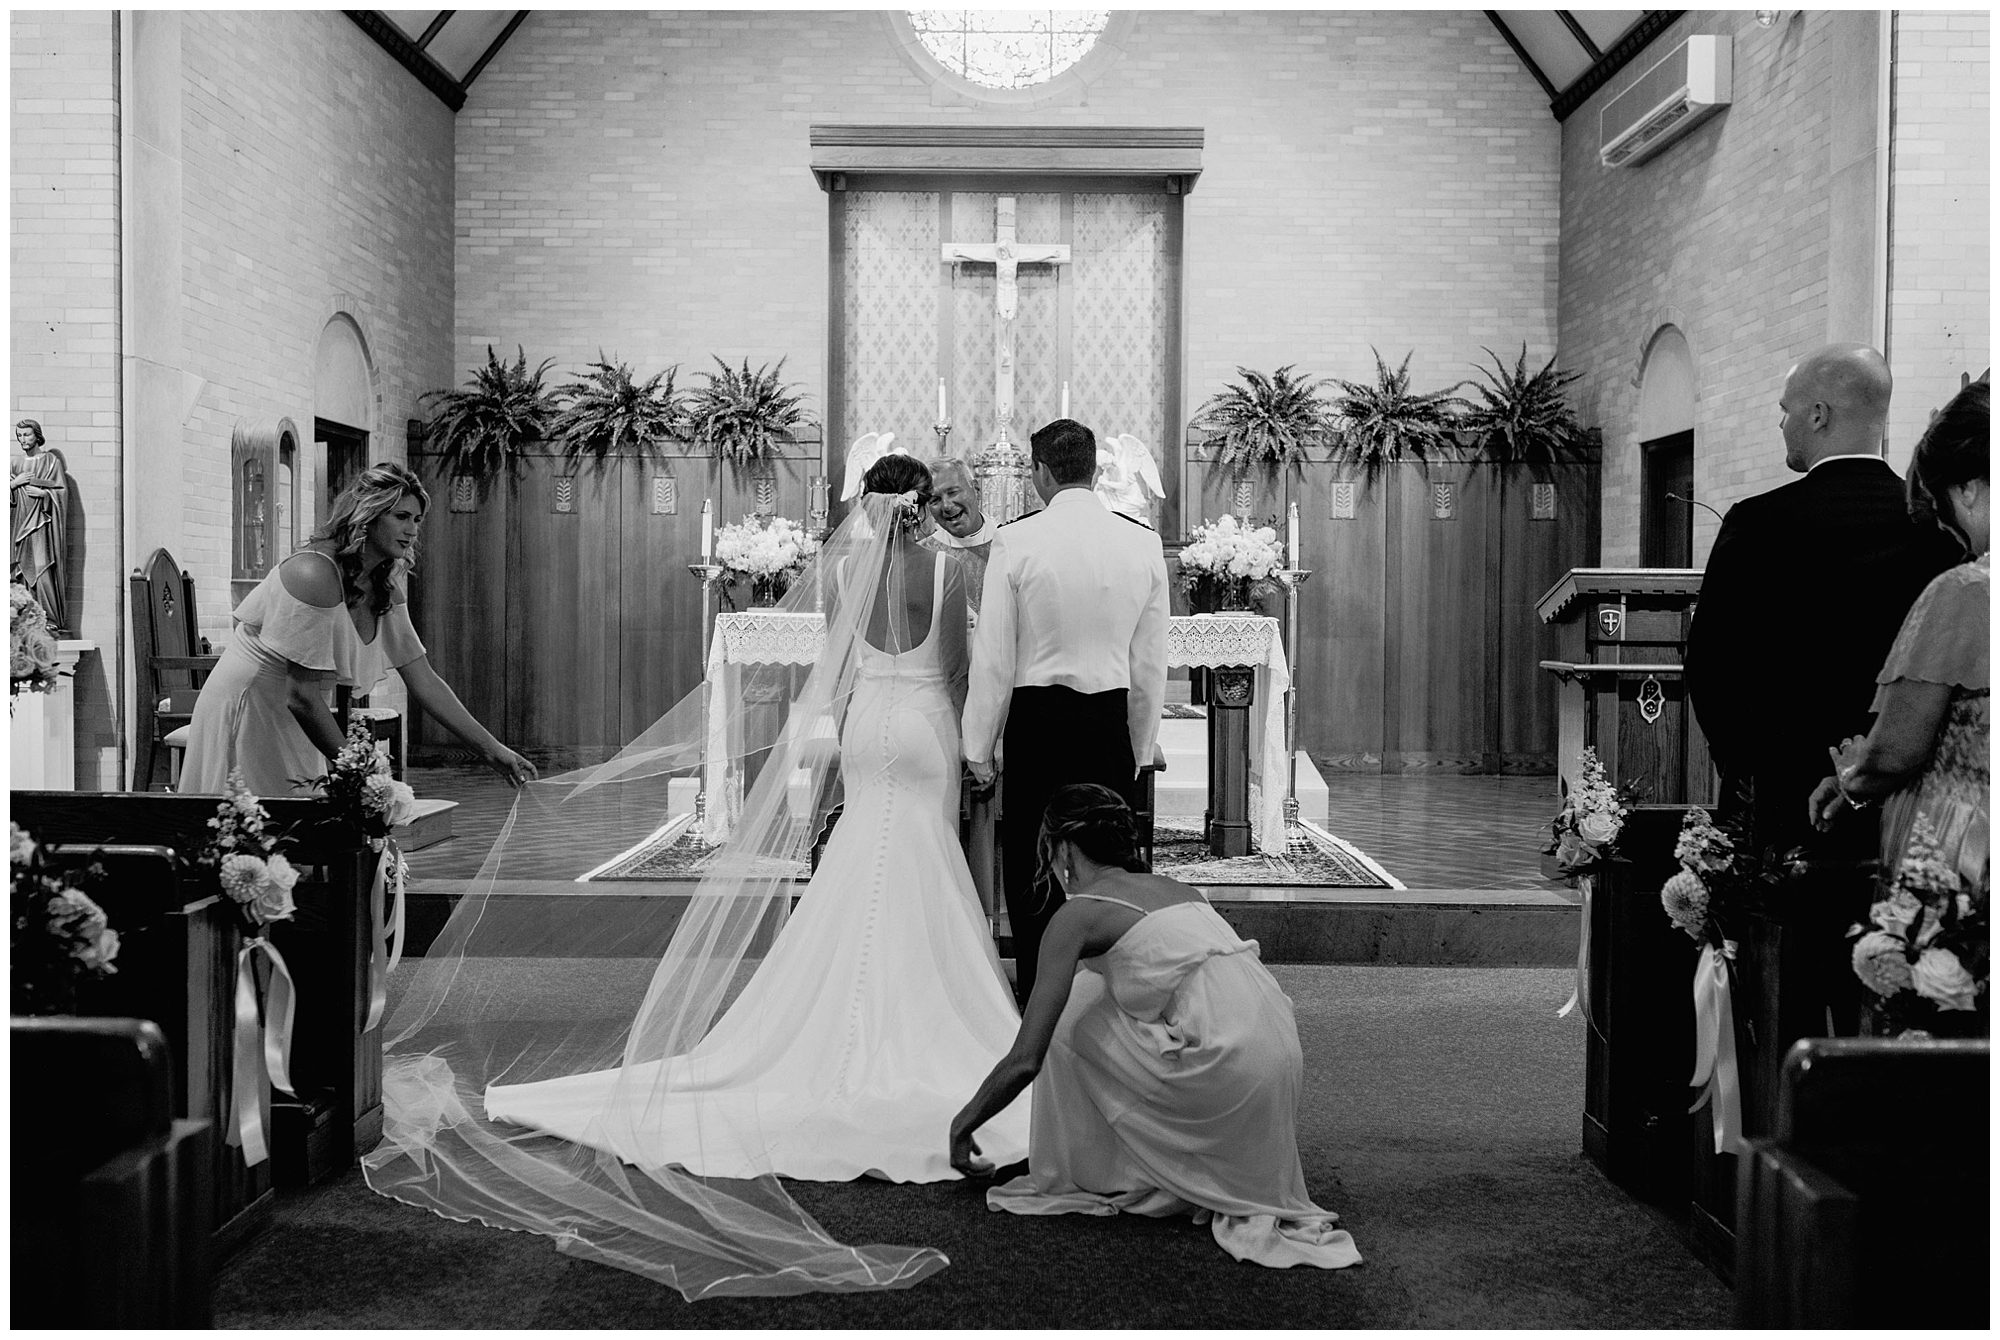 Church wedding ceremony in Seacoast, NH.